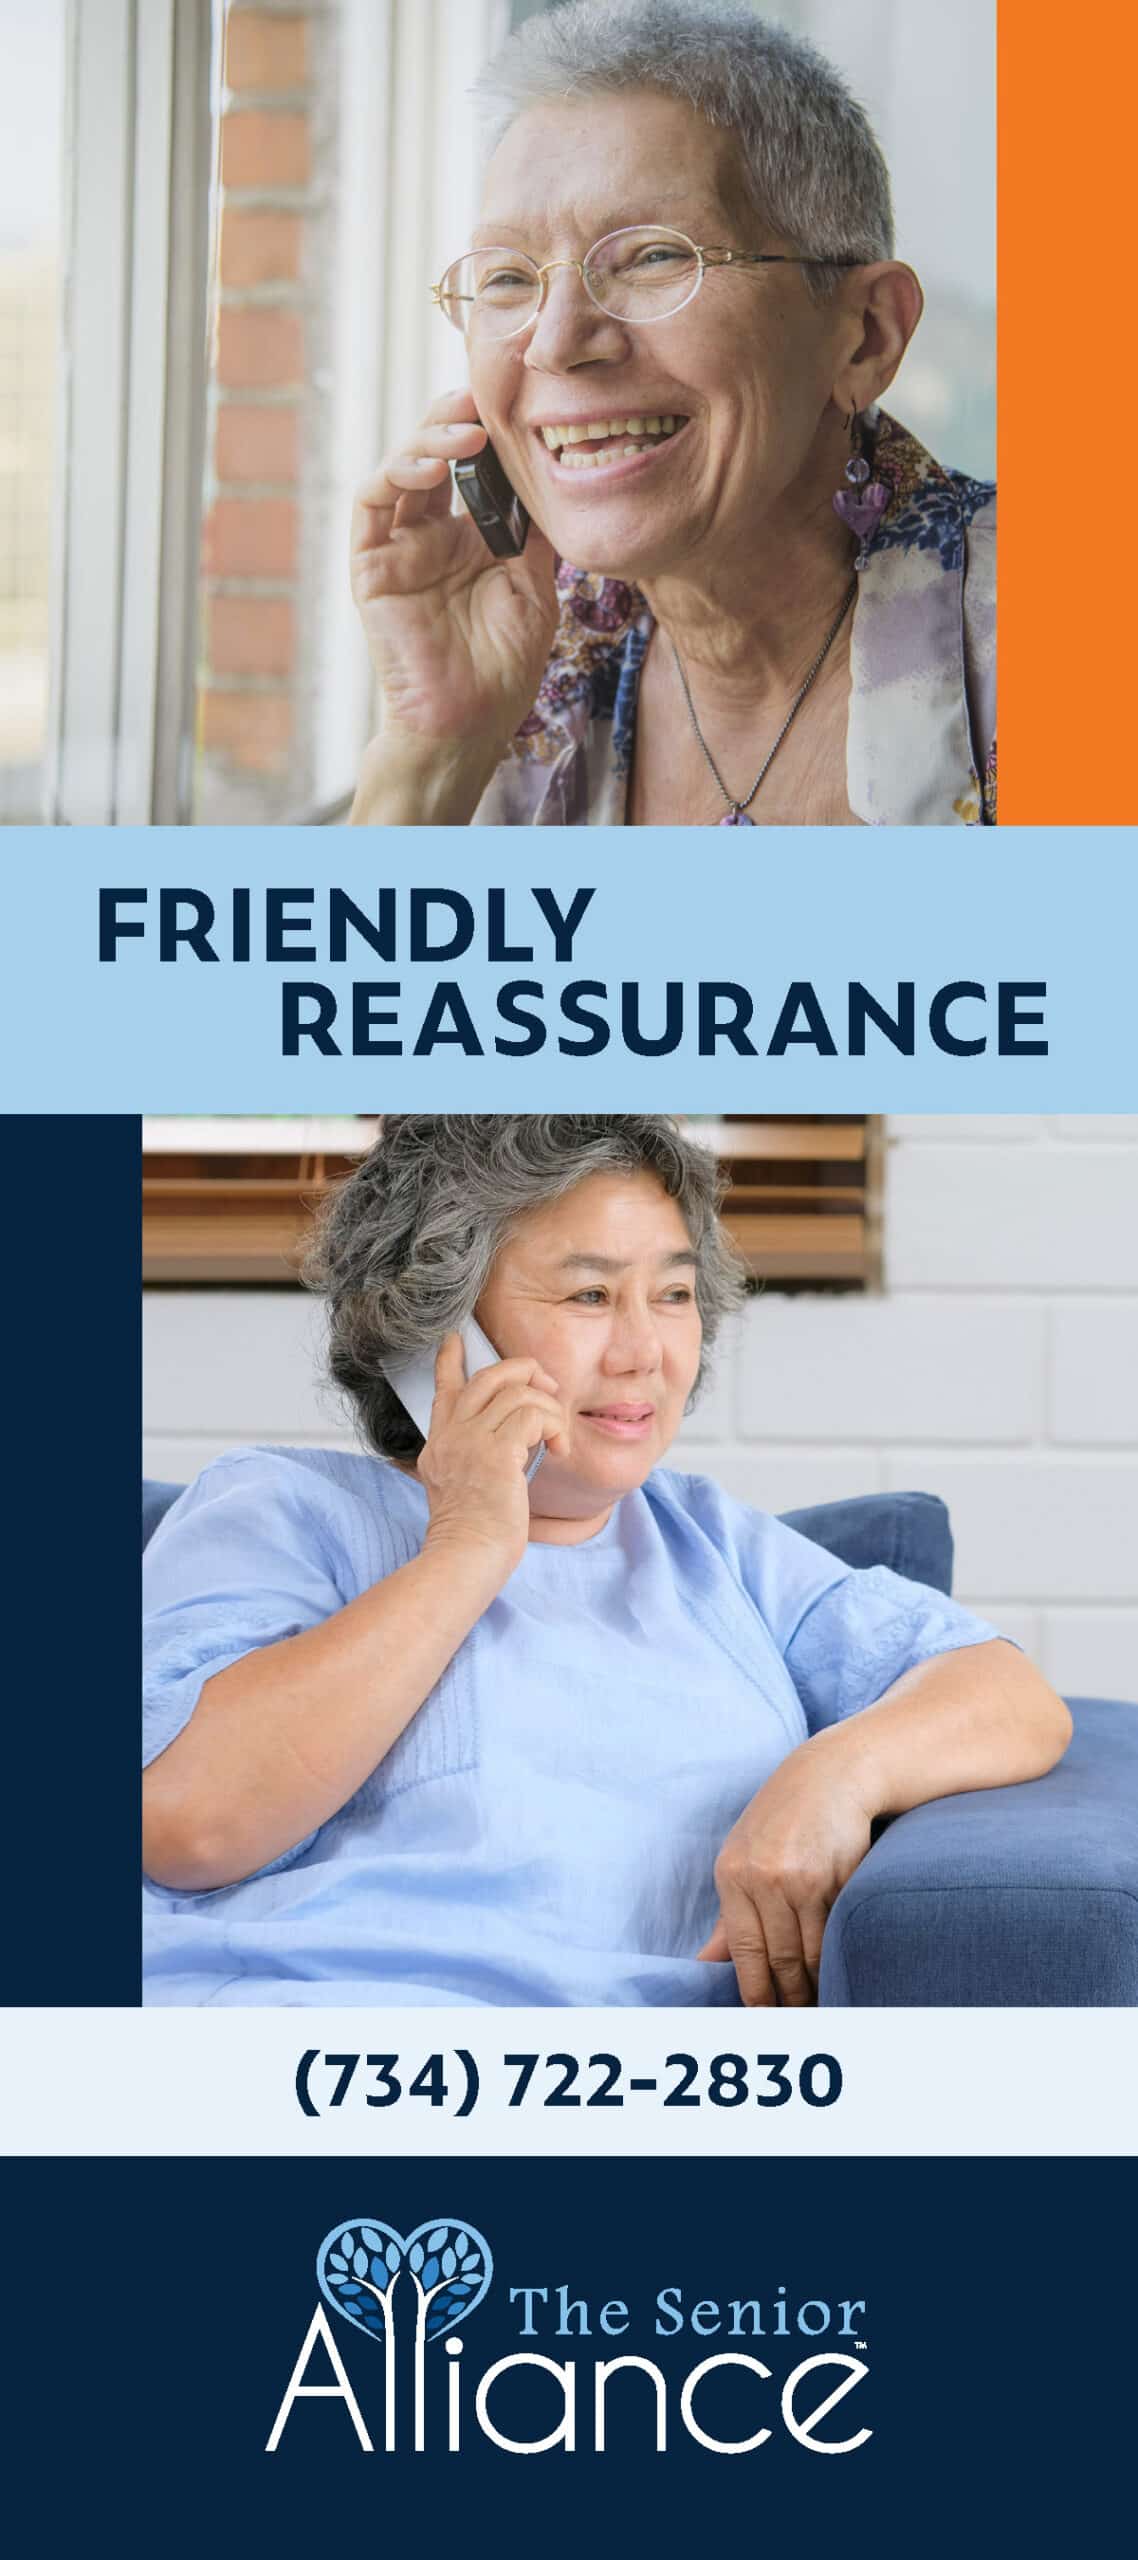 The Senior Alliance: Friendly Reassurance Rackcard